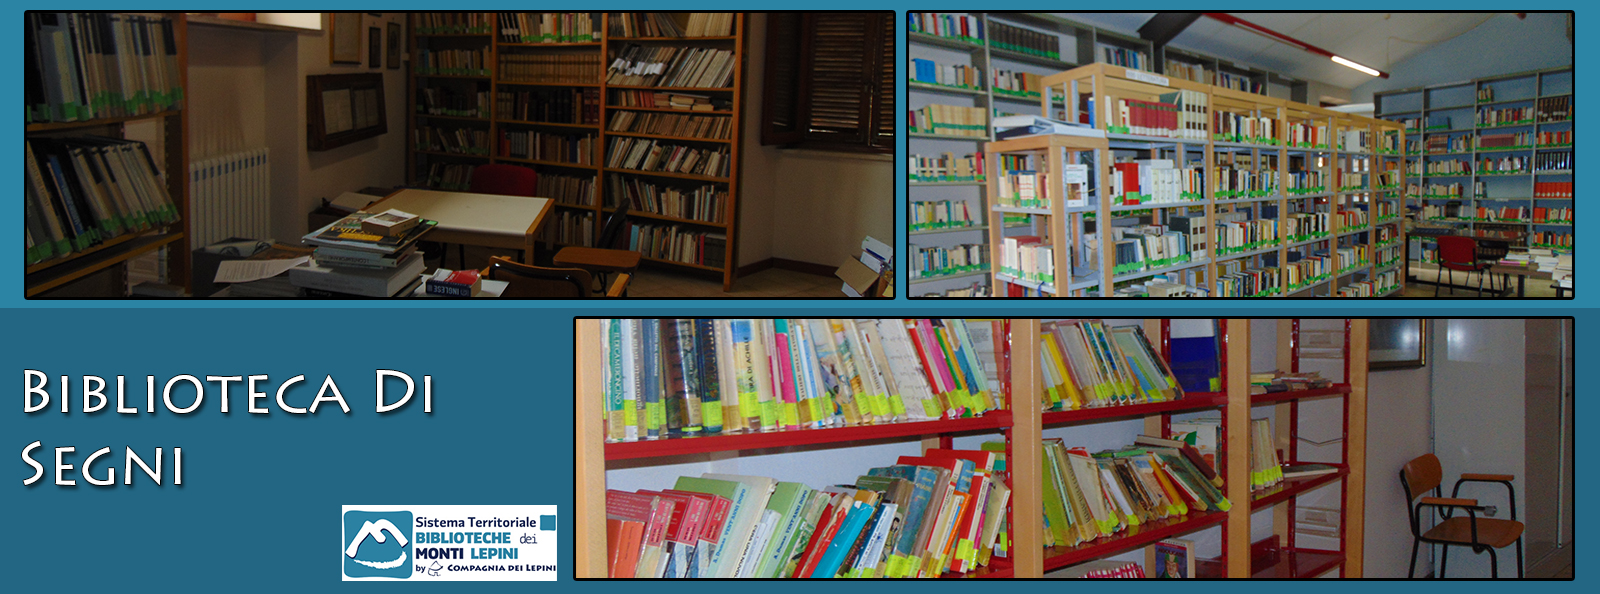 Segni - Biblioteca Comunale